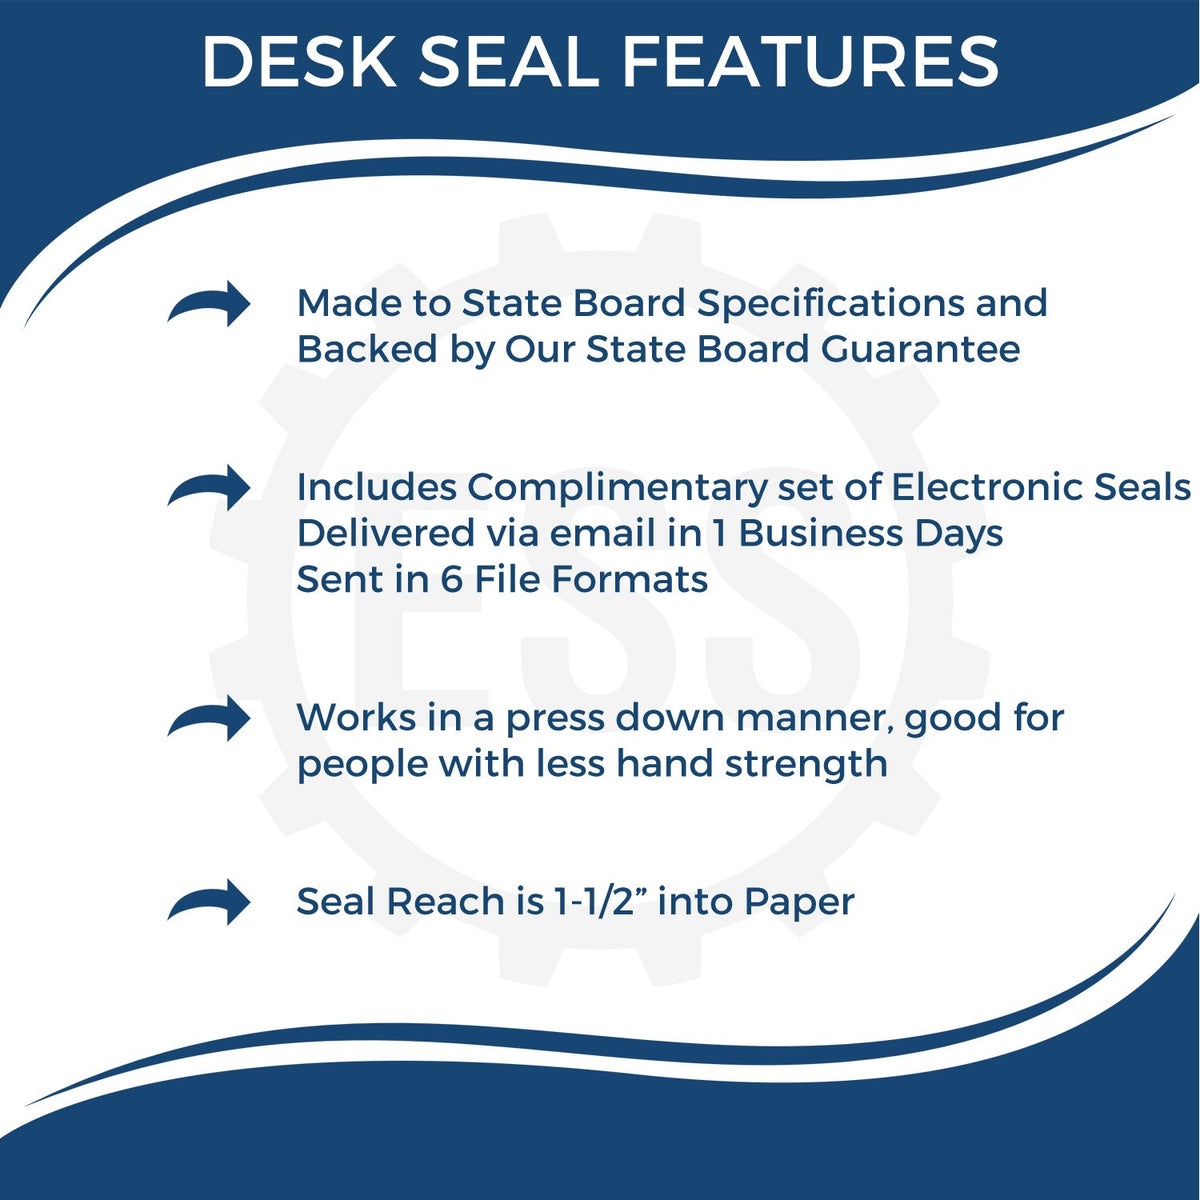 Kentucky Engineer Desk Seal